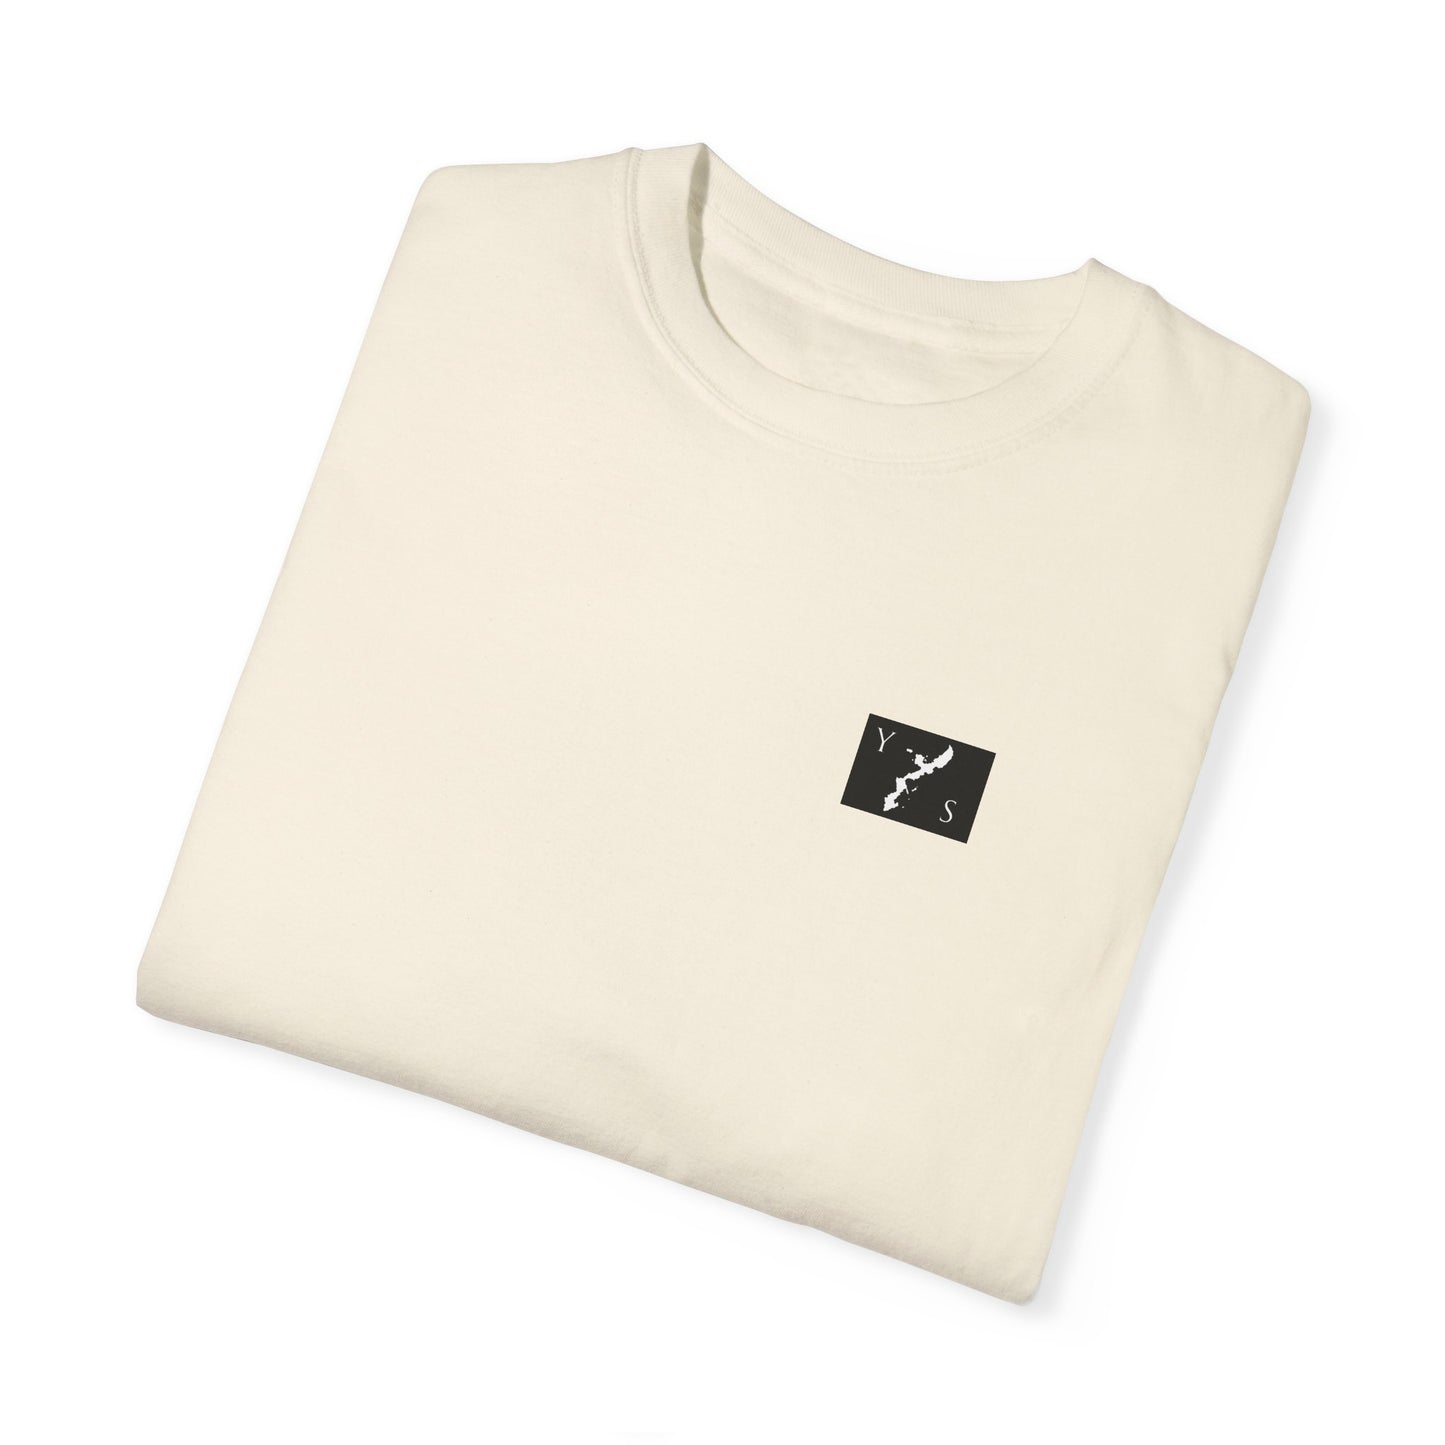 Y&S T-Shirt